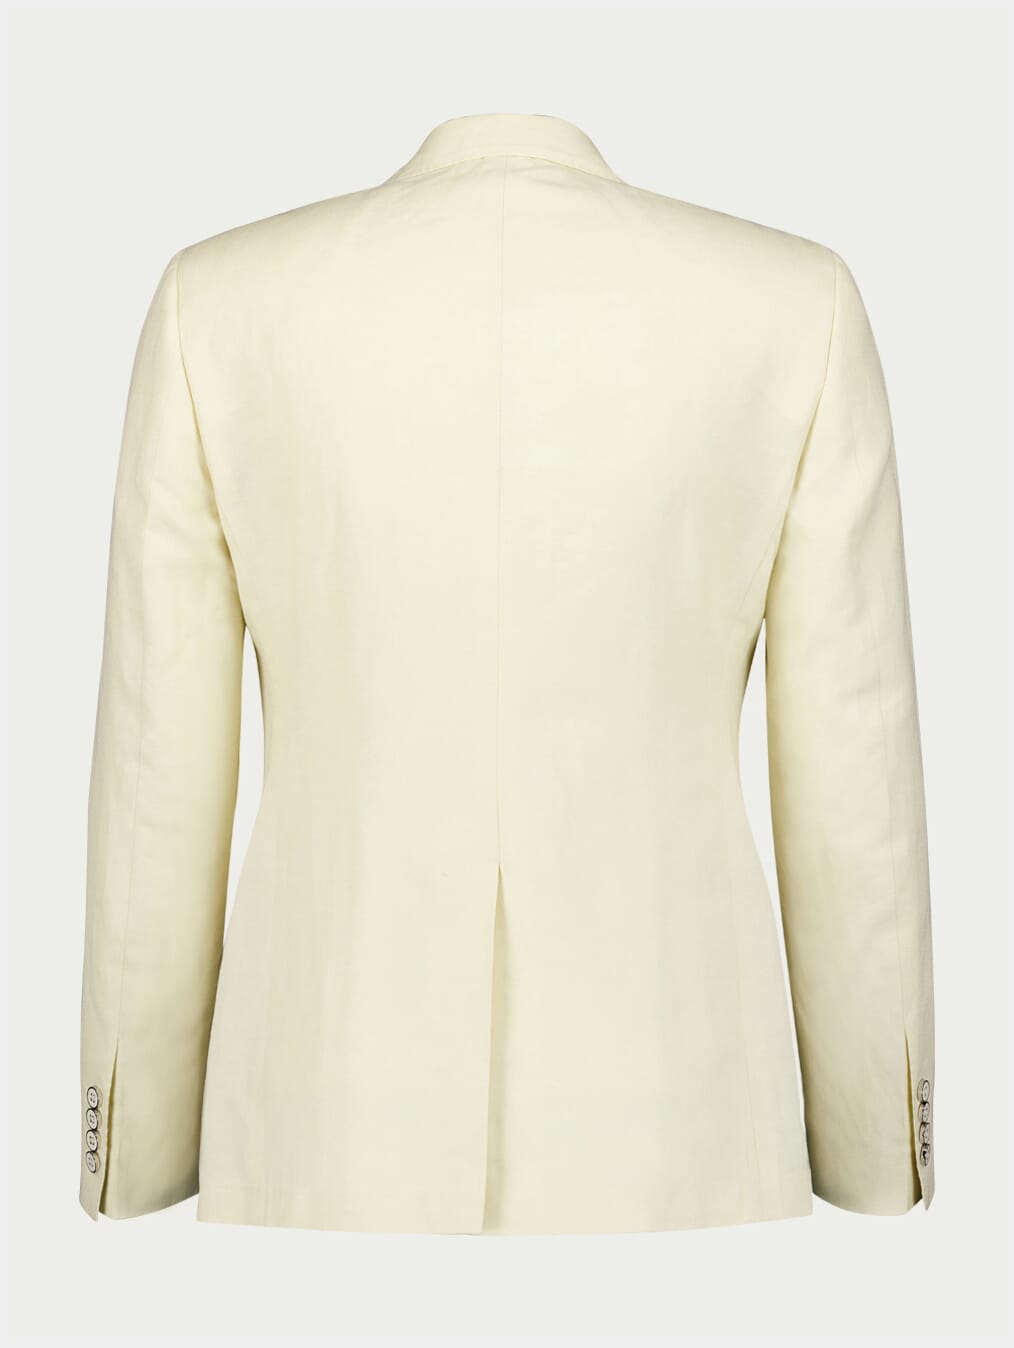 Dolce & GabbanaSingle-Breasted Taormina Jacket at Fashion Clinic